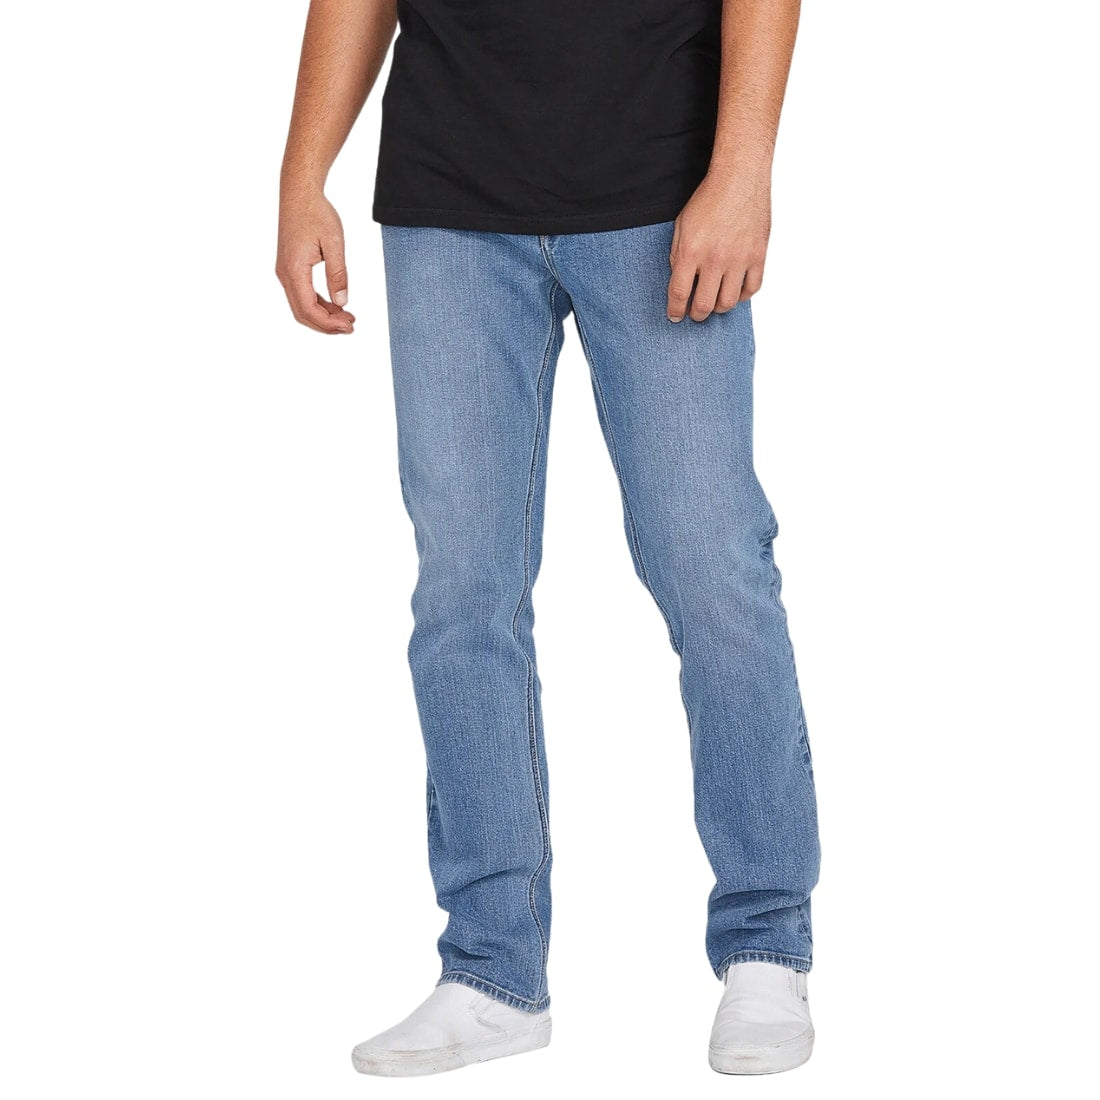 Volcom Solver Denim - Old Town Indigo - Mens Regular/Straight Denim Jeans by Volcom